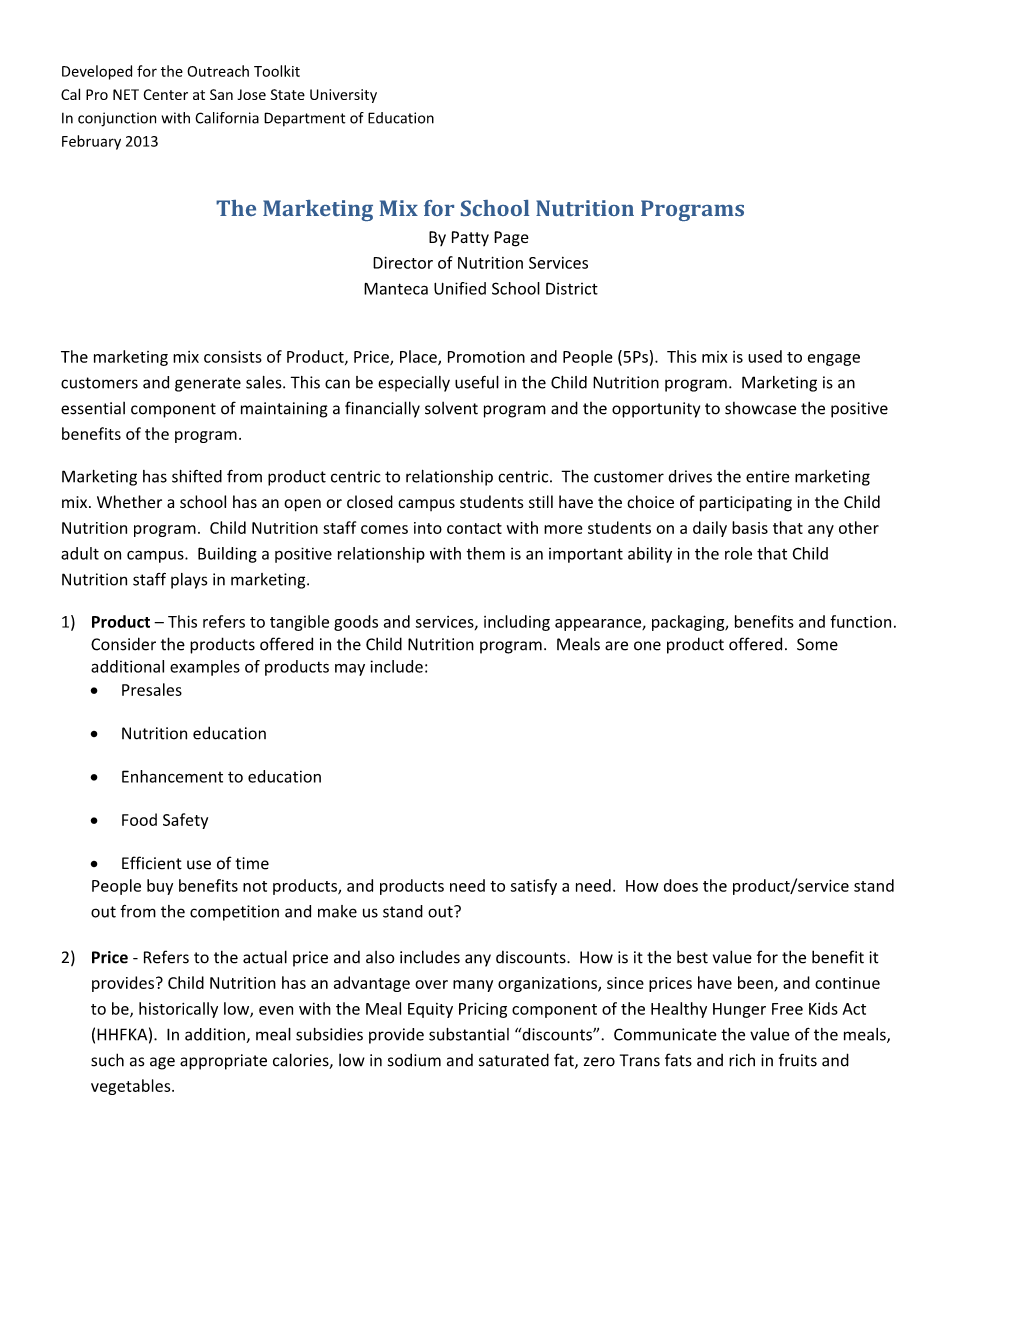 Marketing Mix for School Nutrition Programs